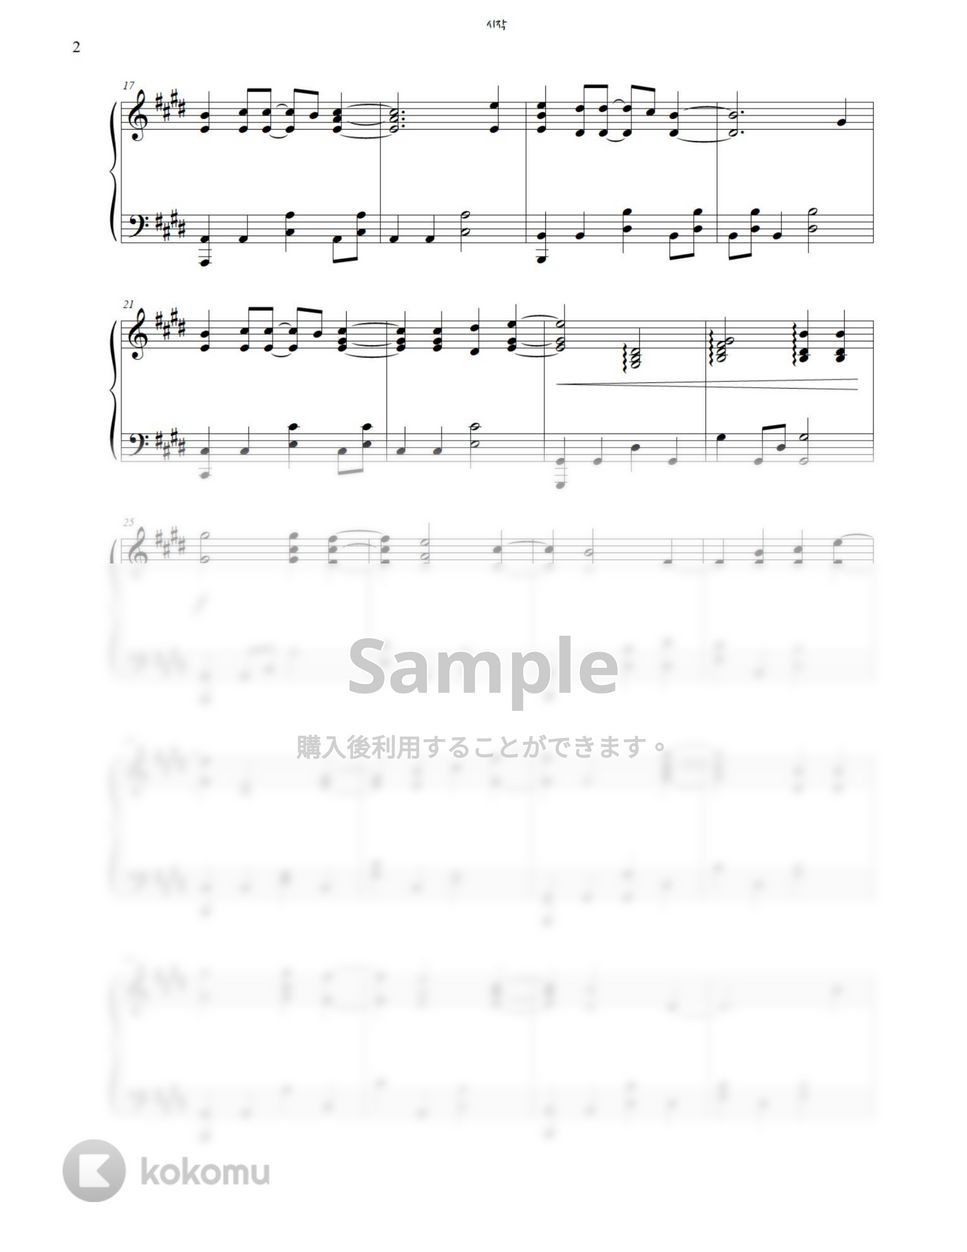 Gaho - 始まり(梨泰院クラス OST) by JichanPark